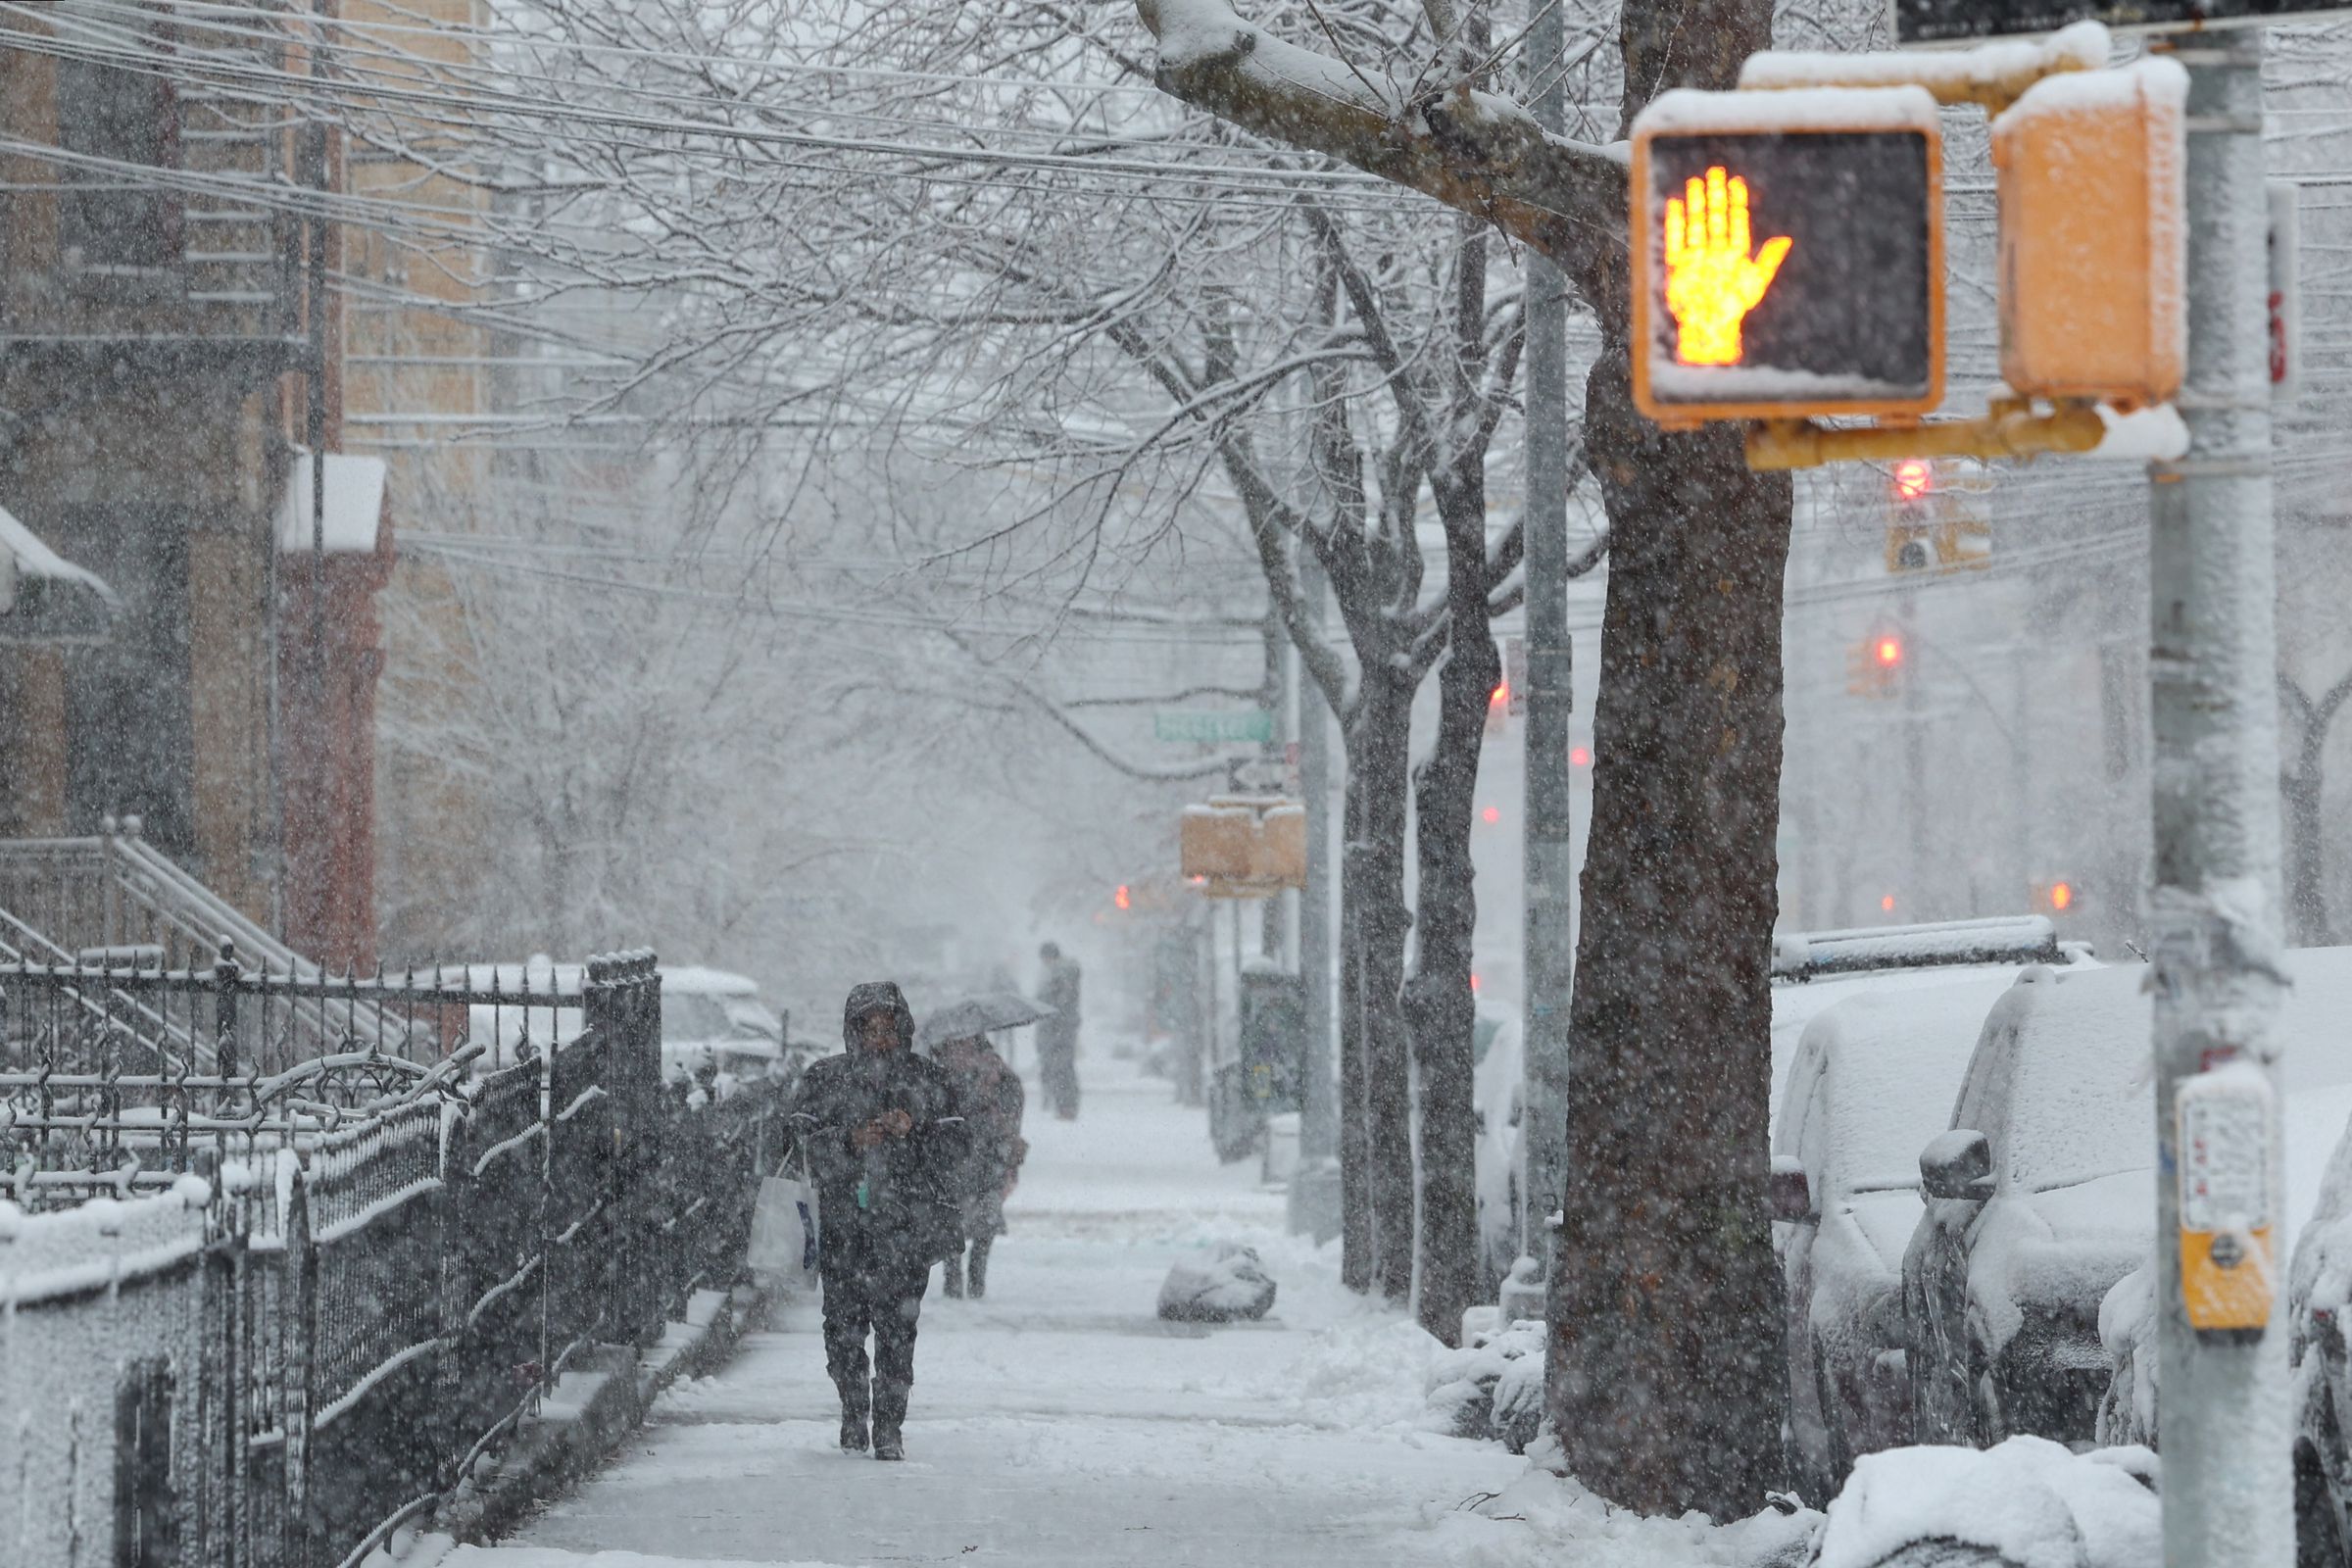 Snow fallingon a New York City street